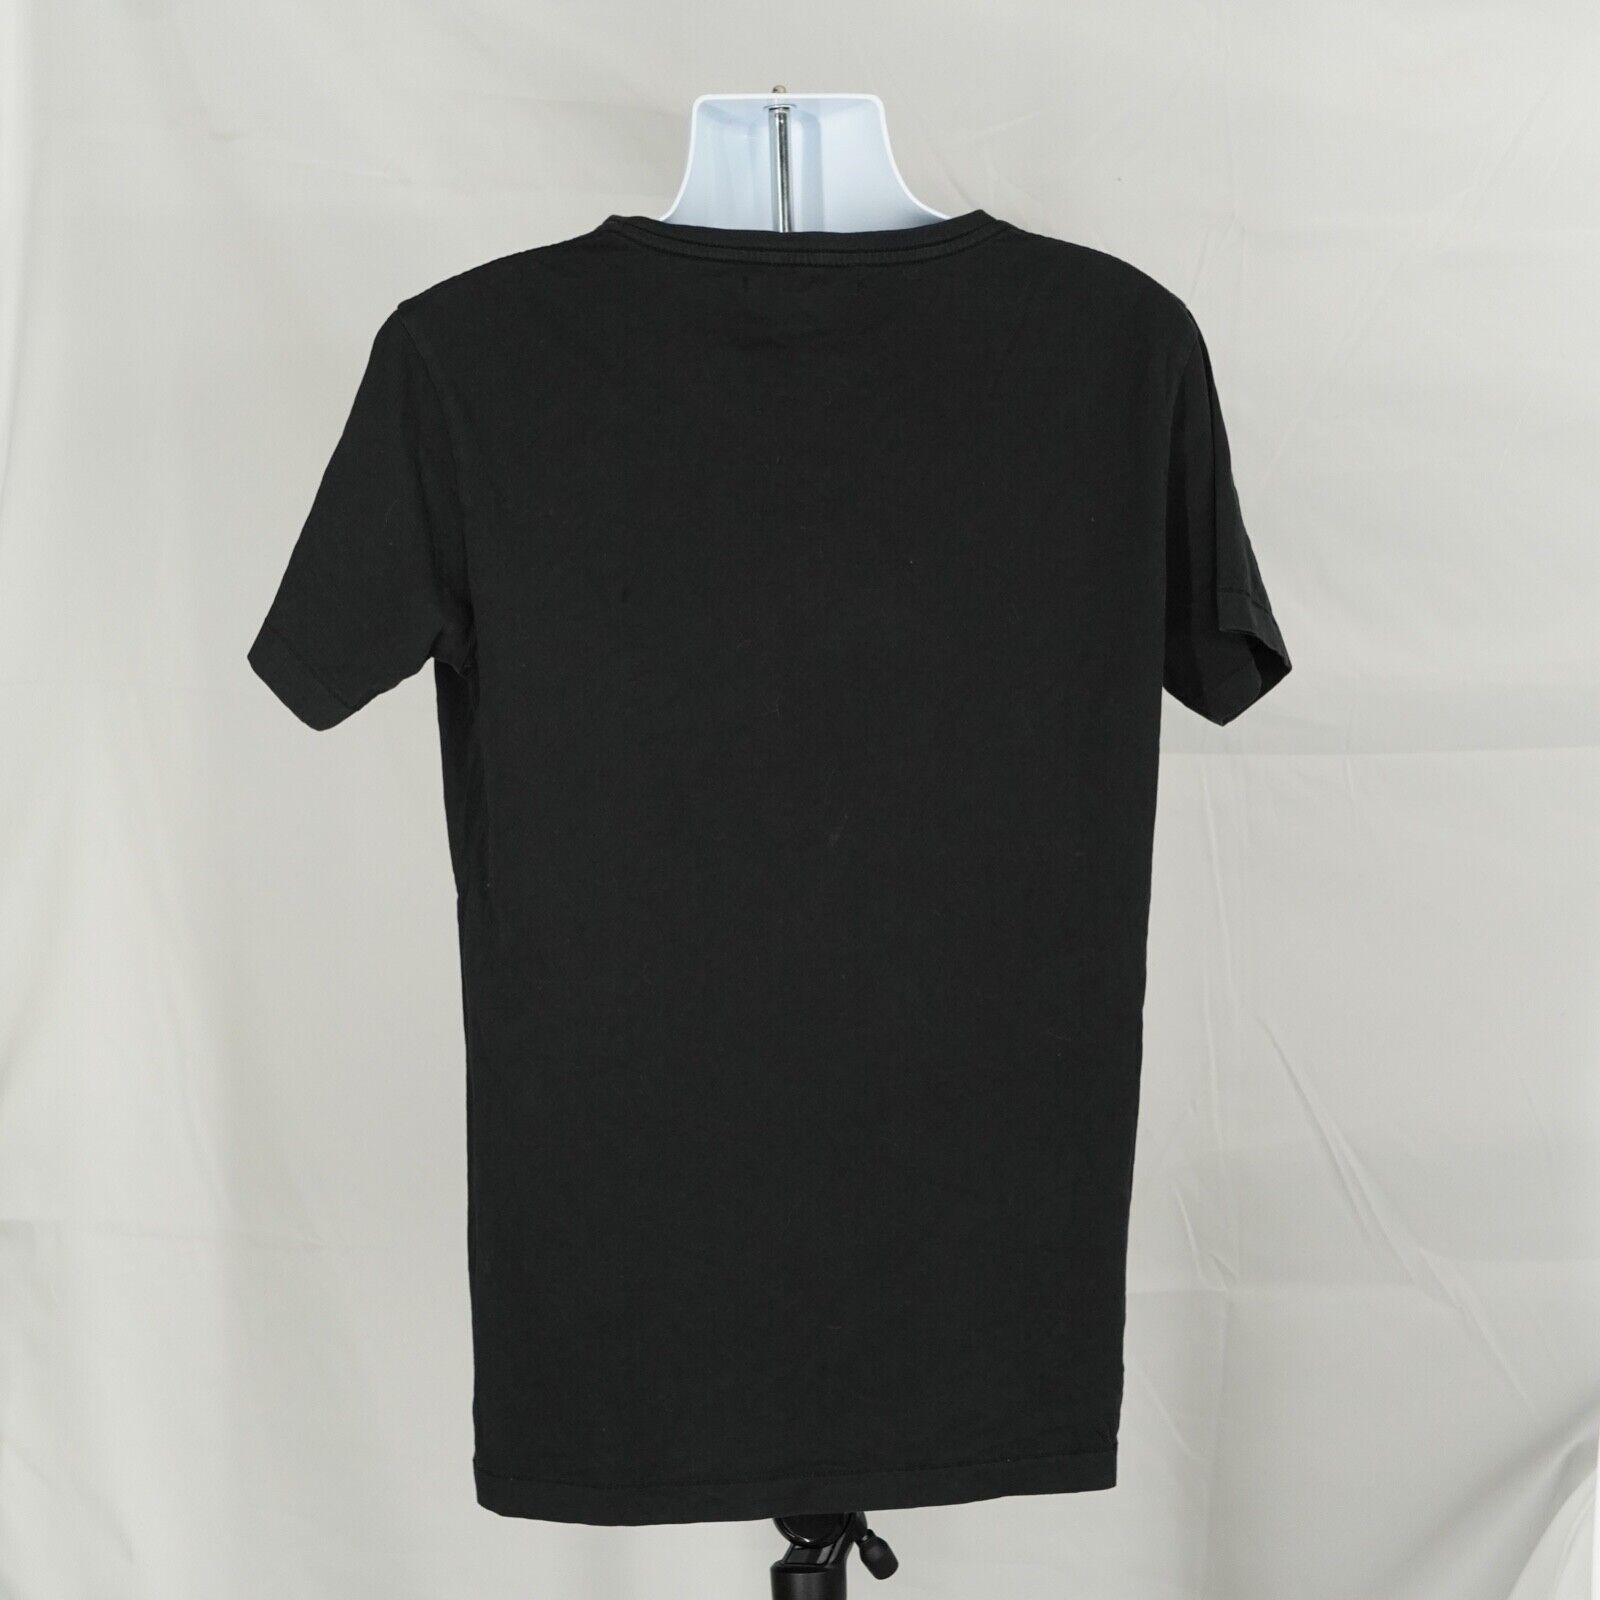 Tsubi Black Cross Graphic T Shirt - 6